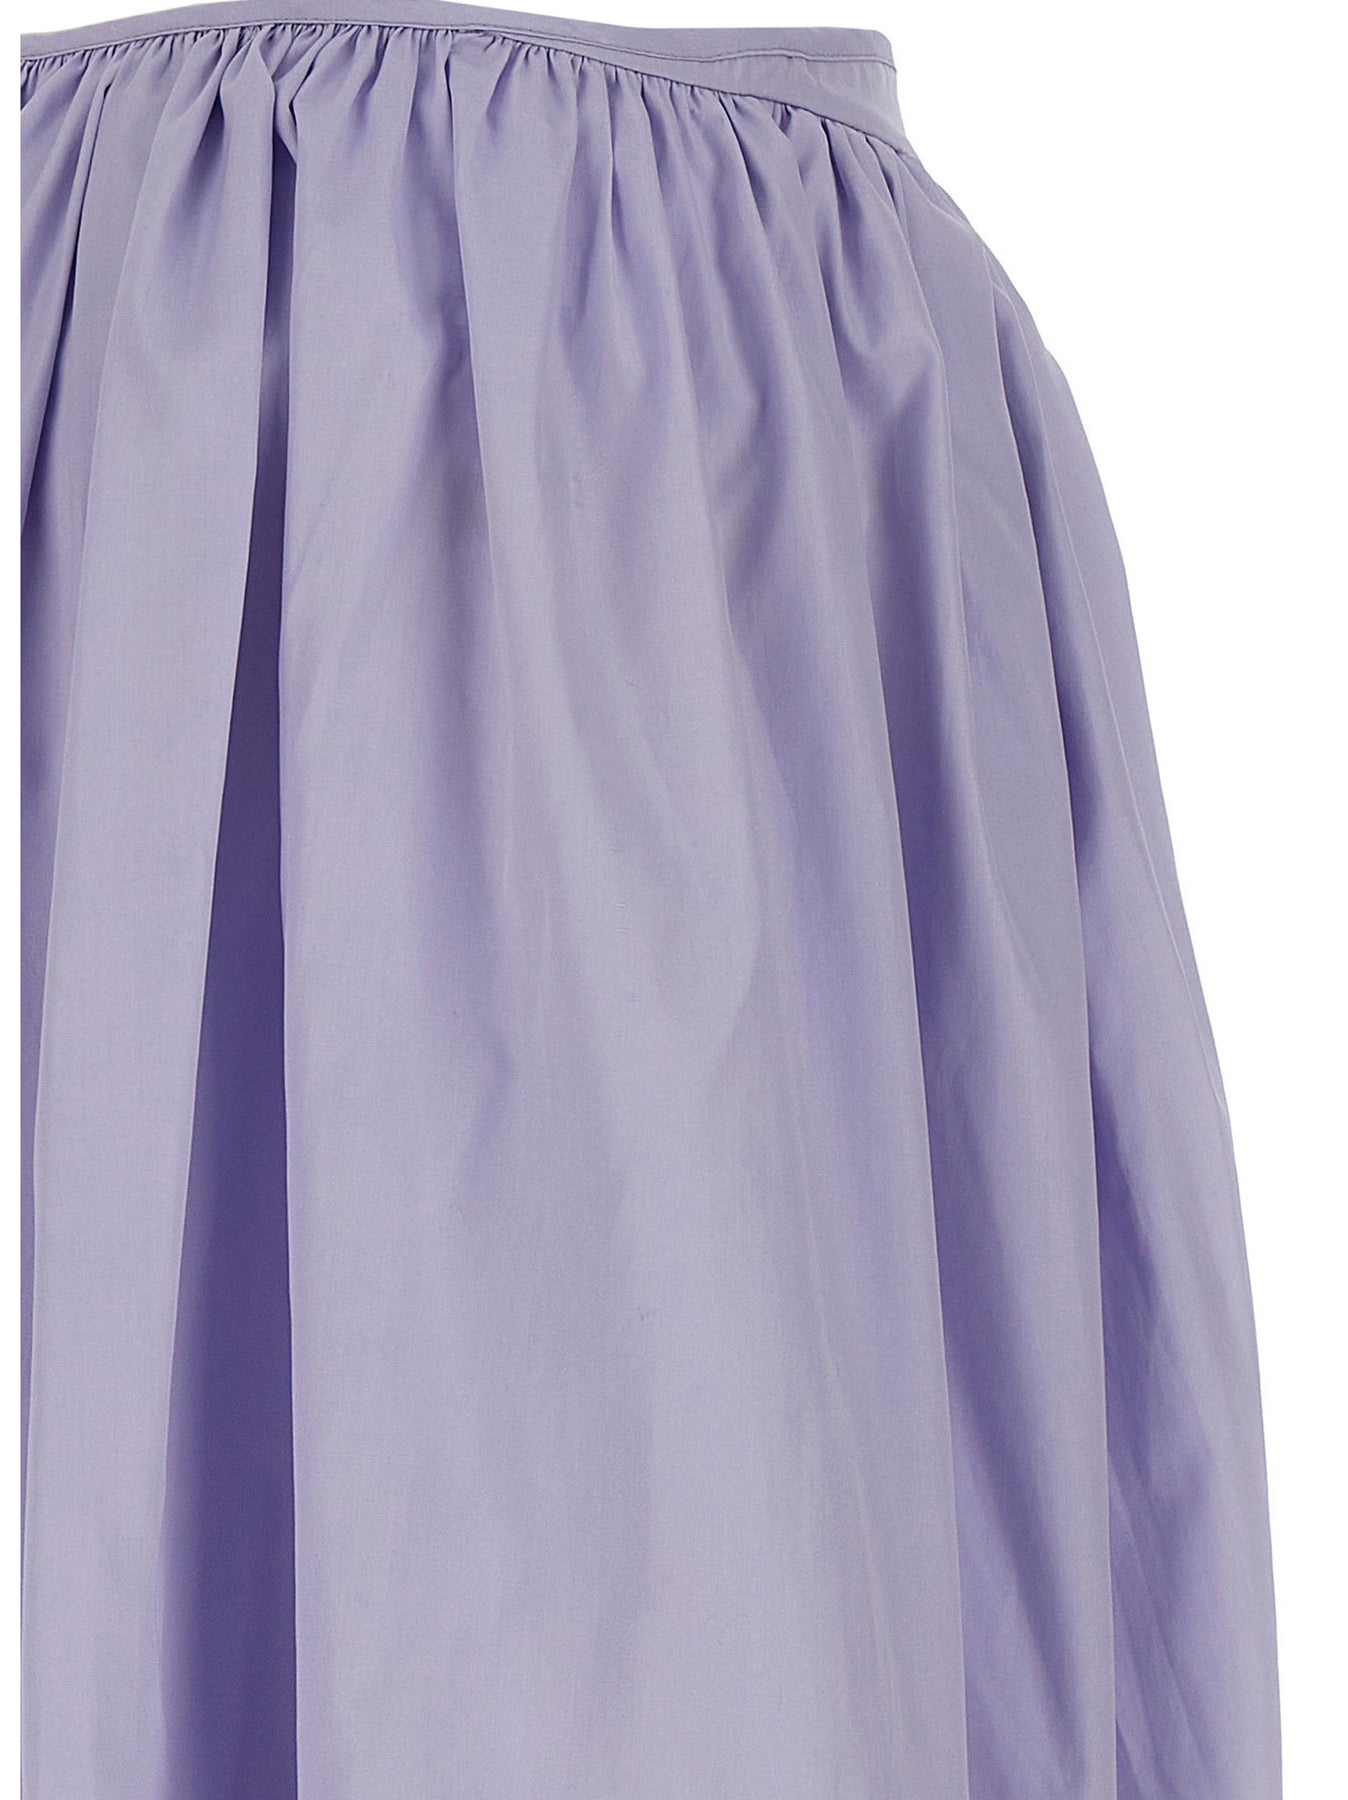 Damara Skirts Purple - 4